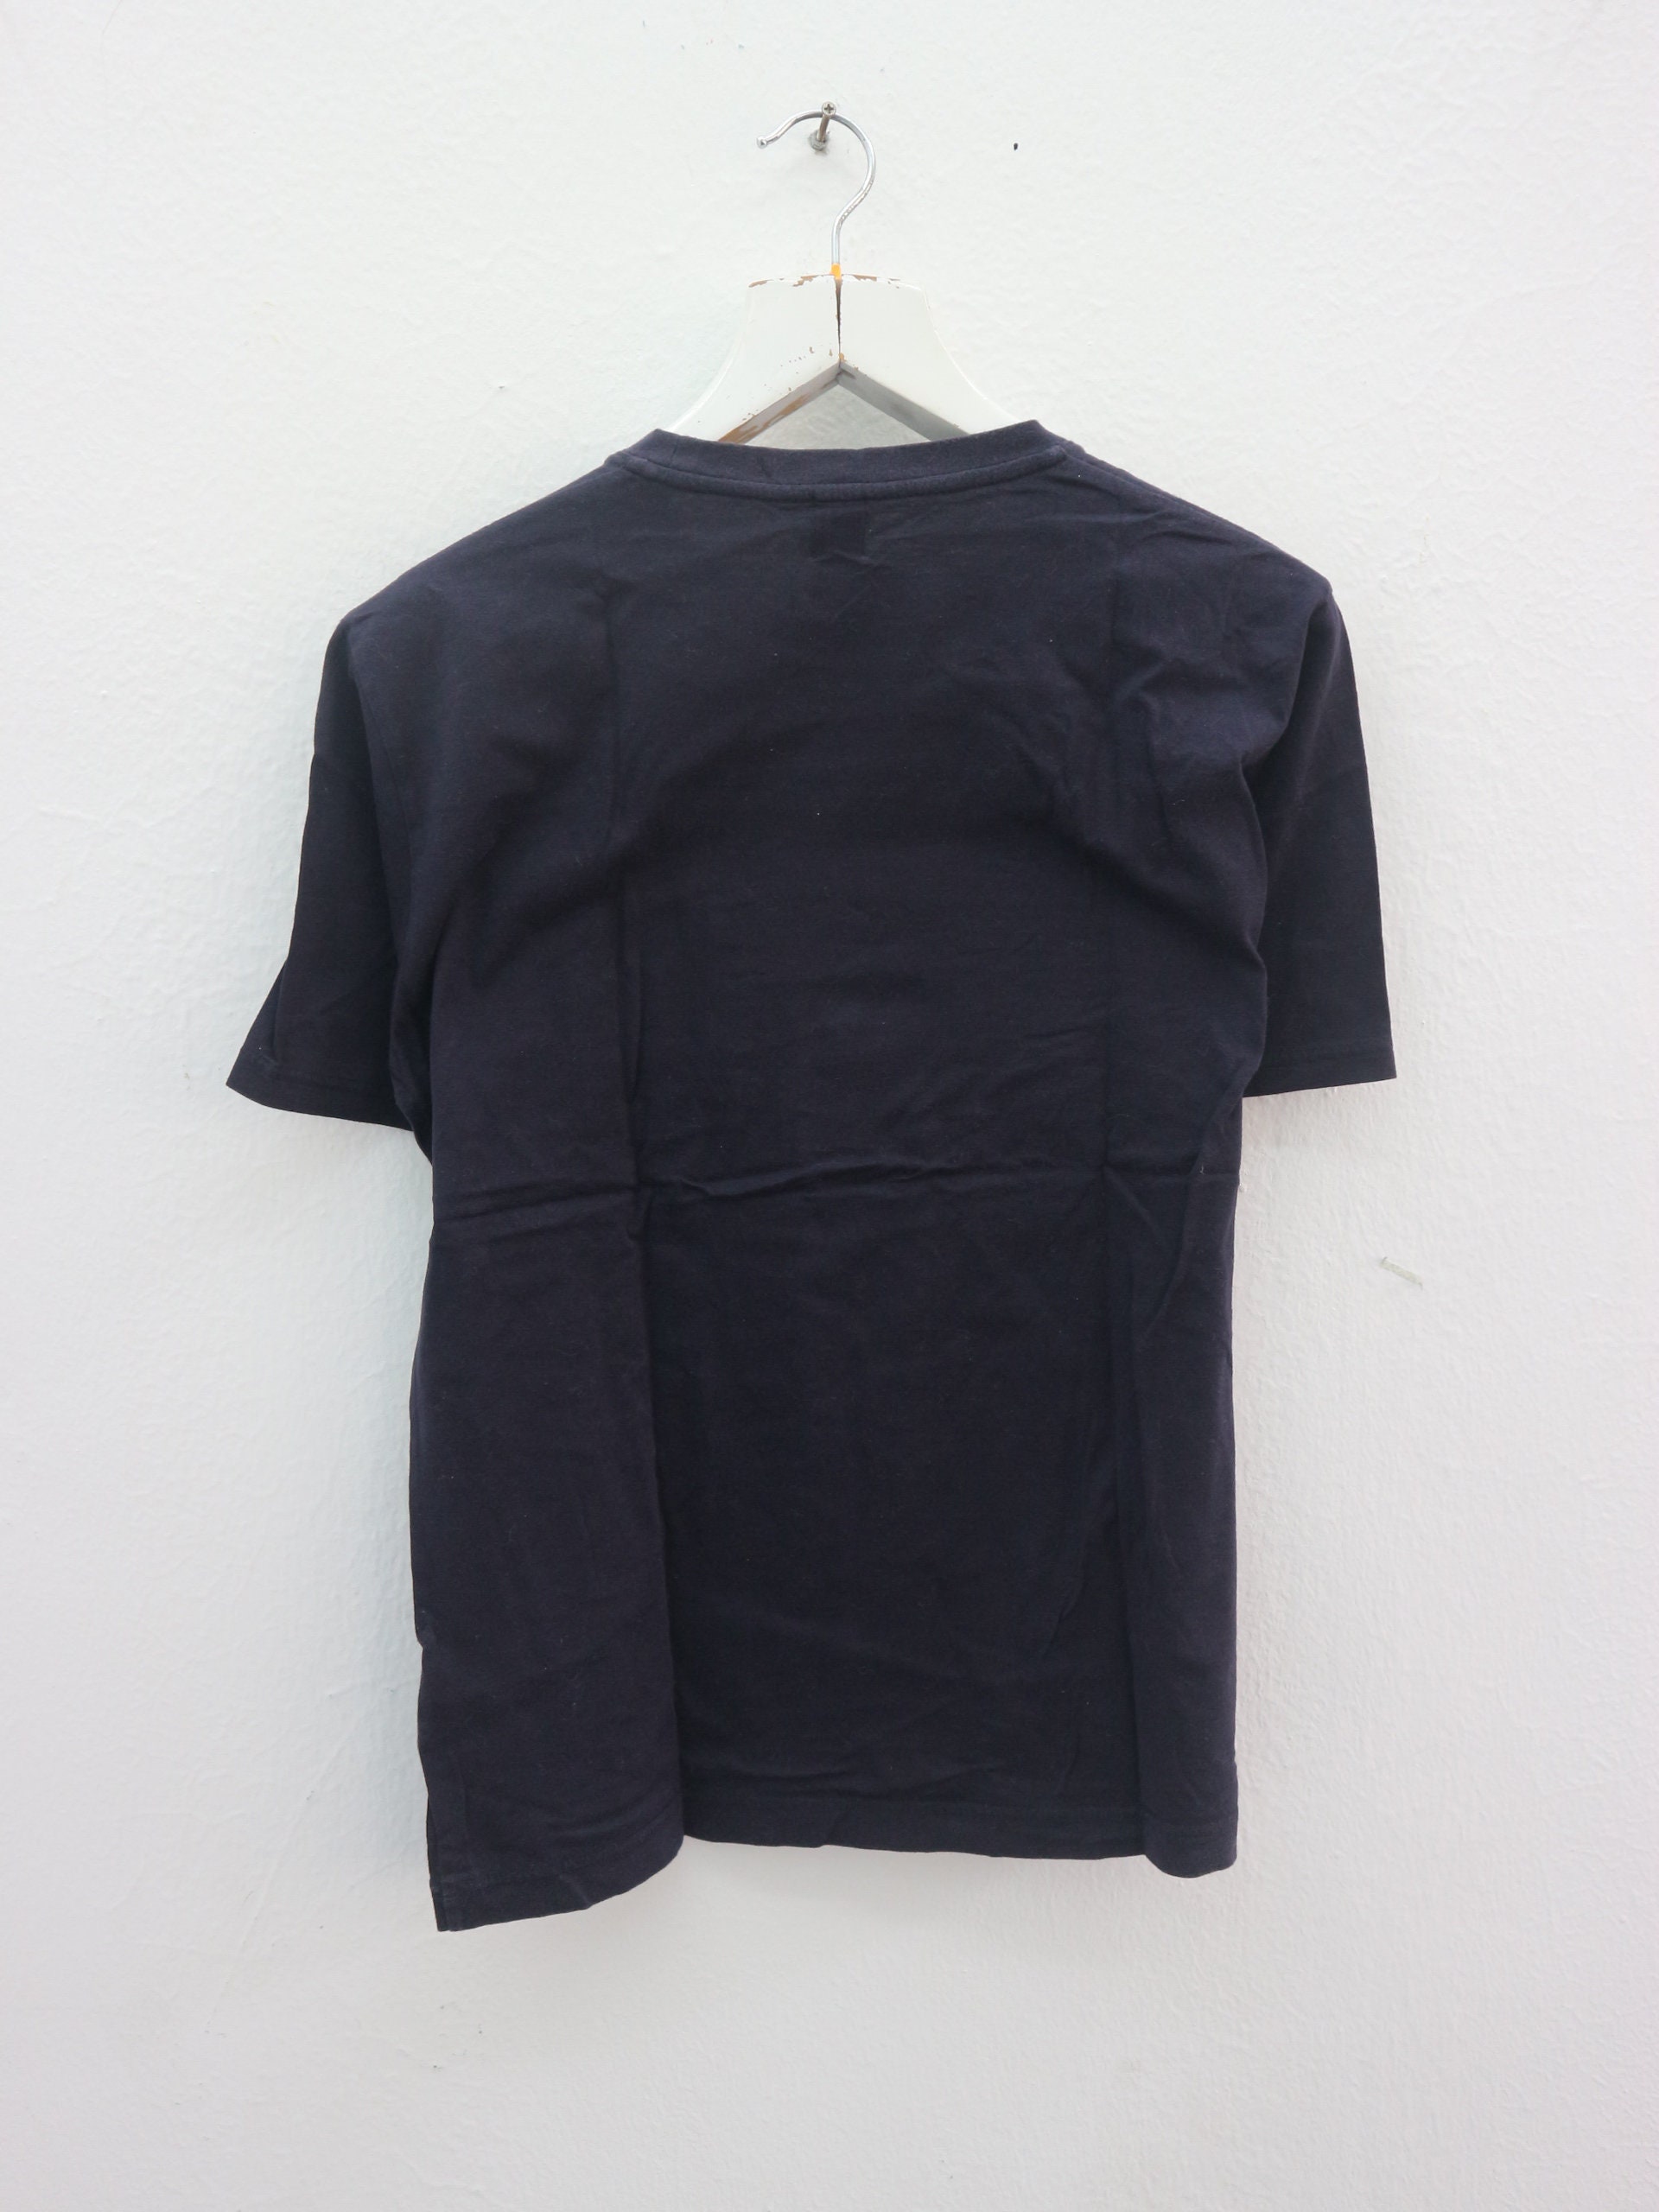 Offer Vintage TAKEO KIKUCHI T-Shirt Japan Fashion Street | Etsy